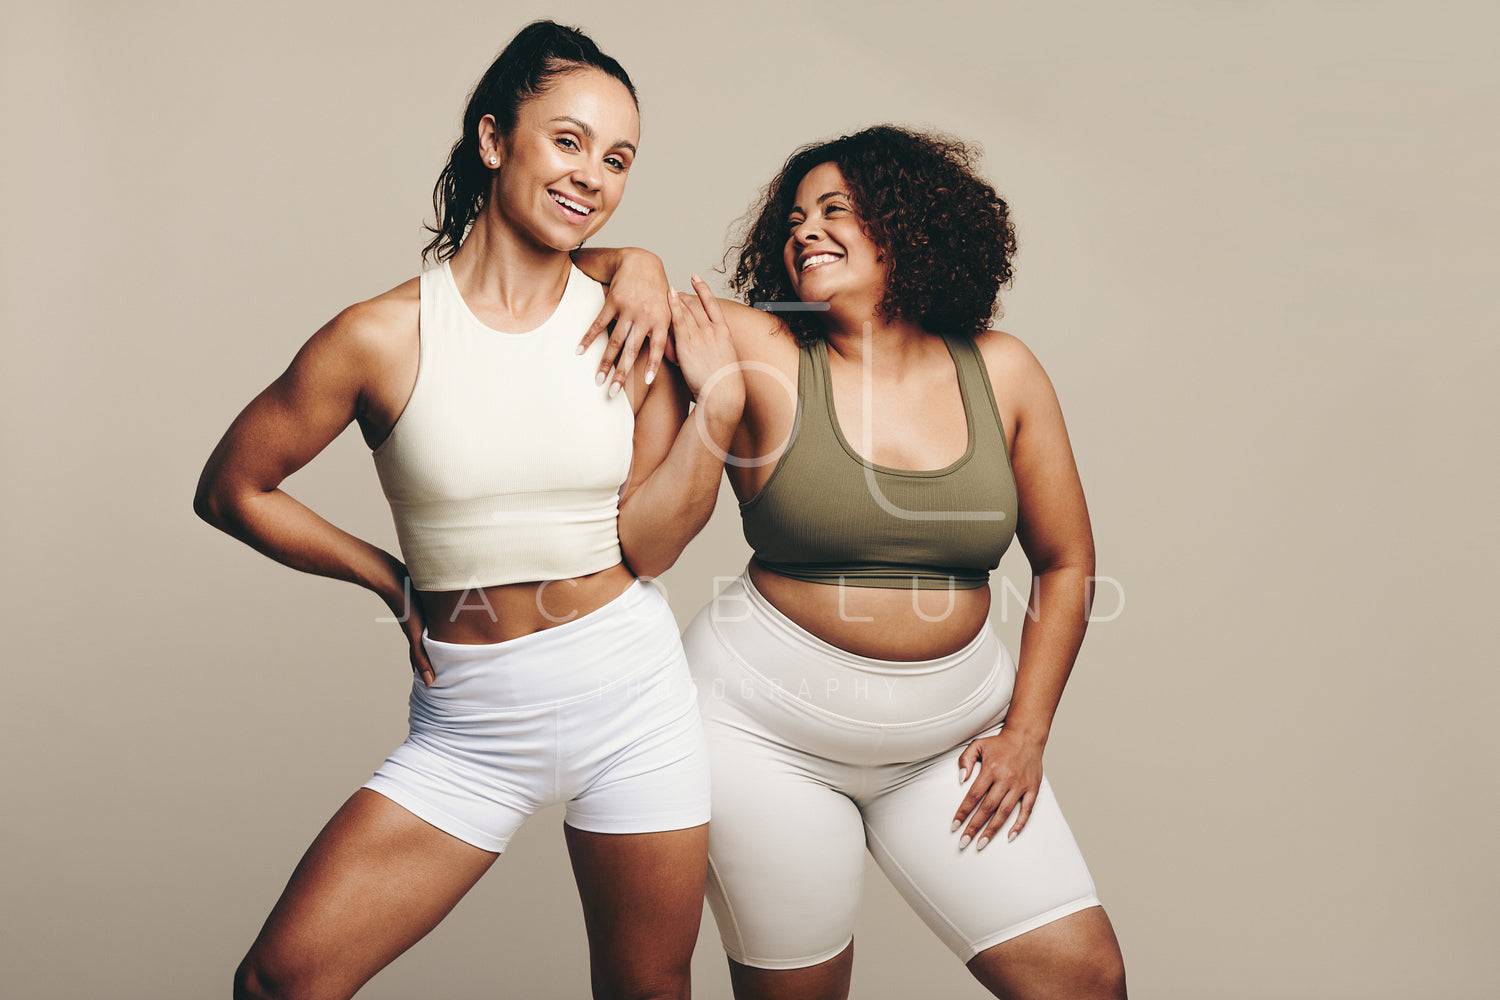 Women's Gymwear - Workout Clothes For Women